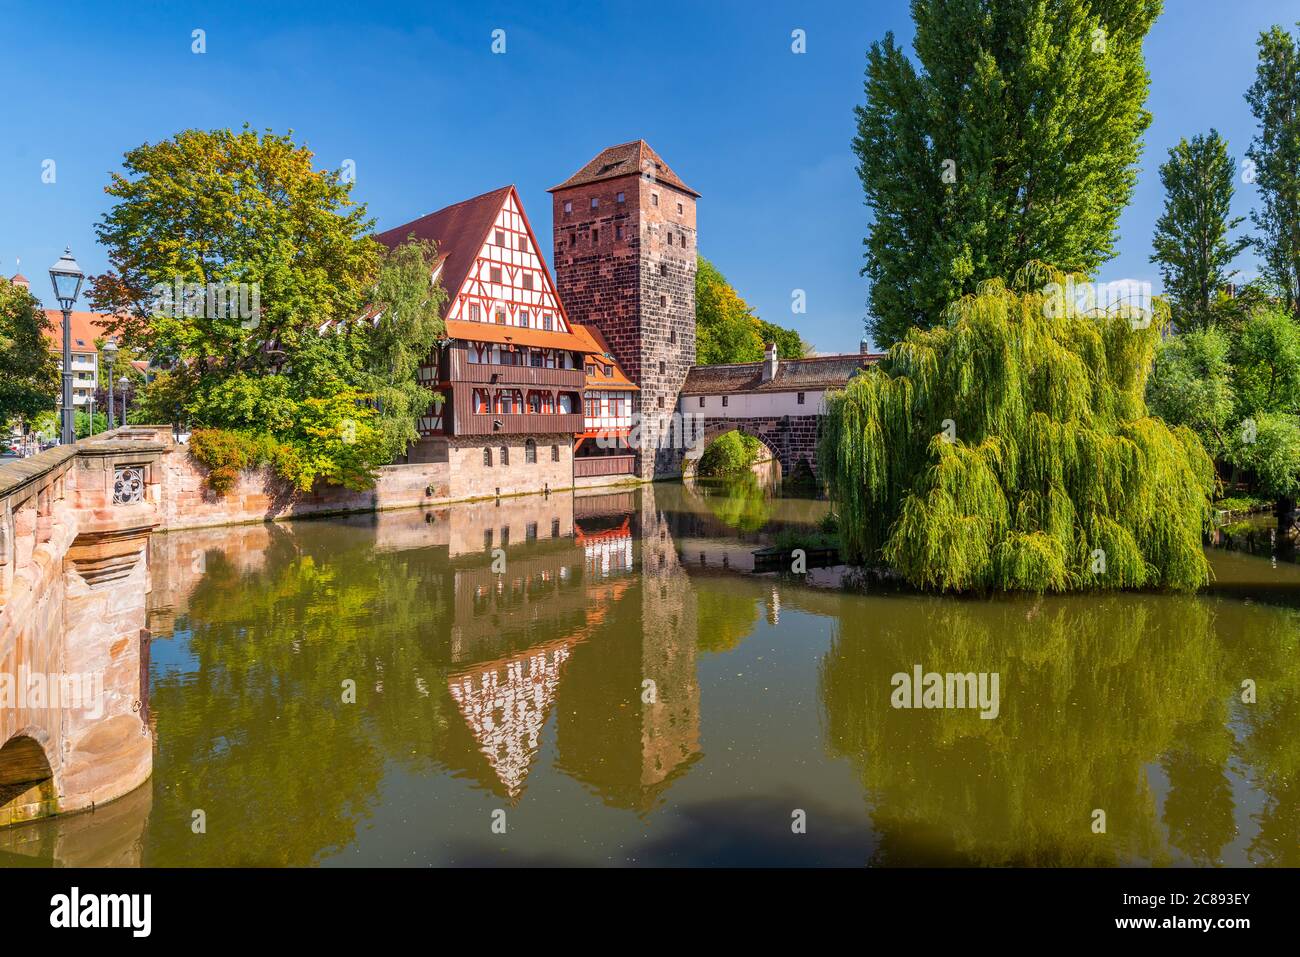 Executioner's bridge in Nuremberg, Germany on the Pegnitz River. Stock Photo